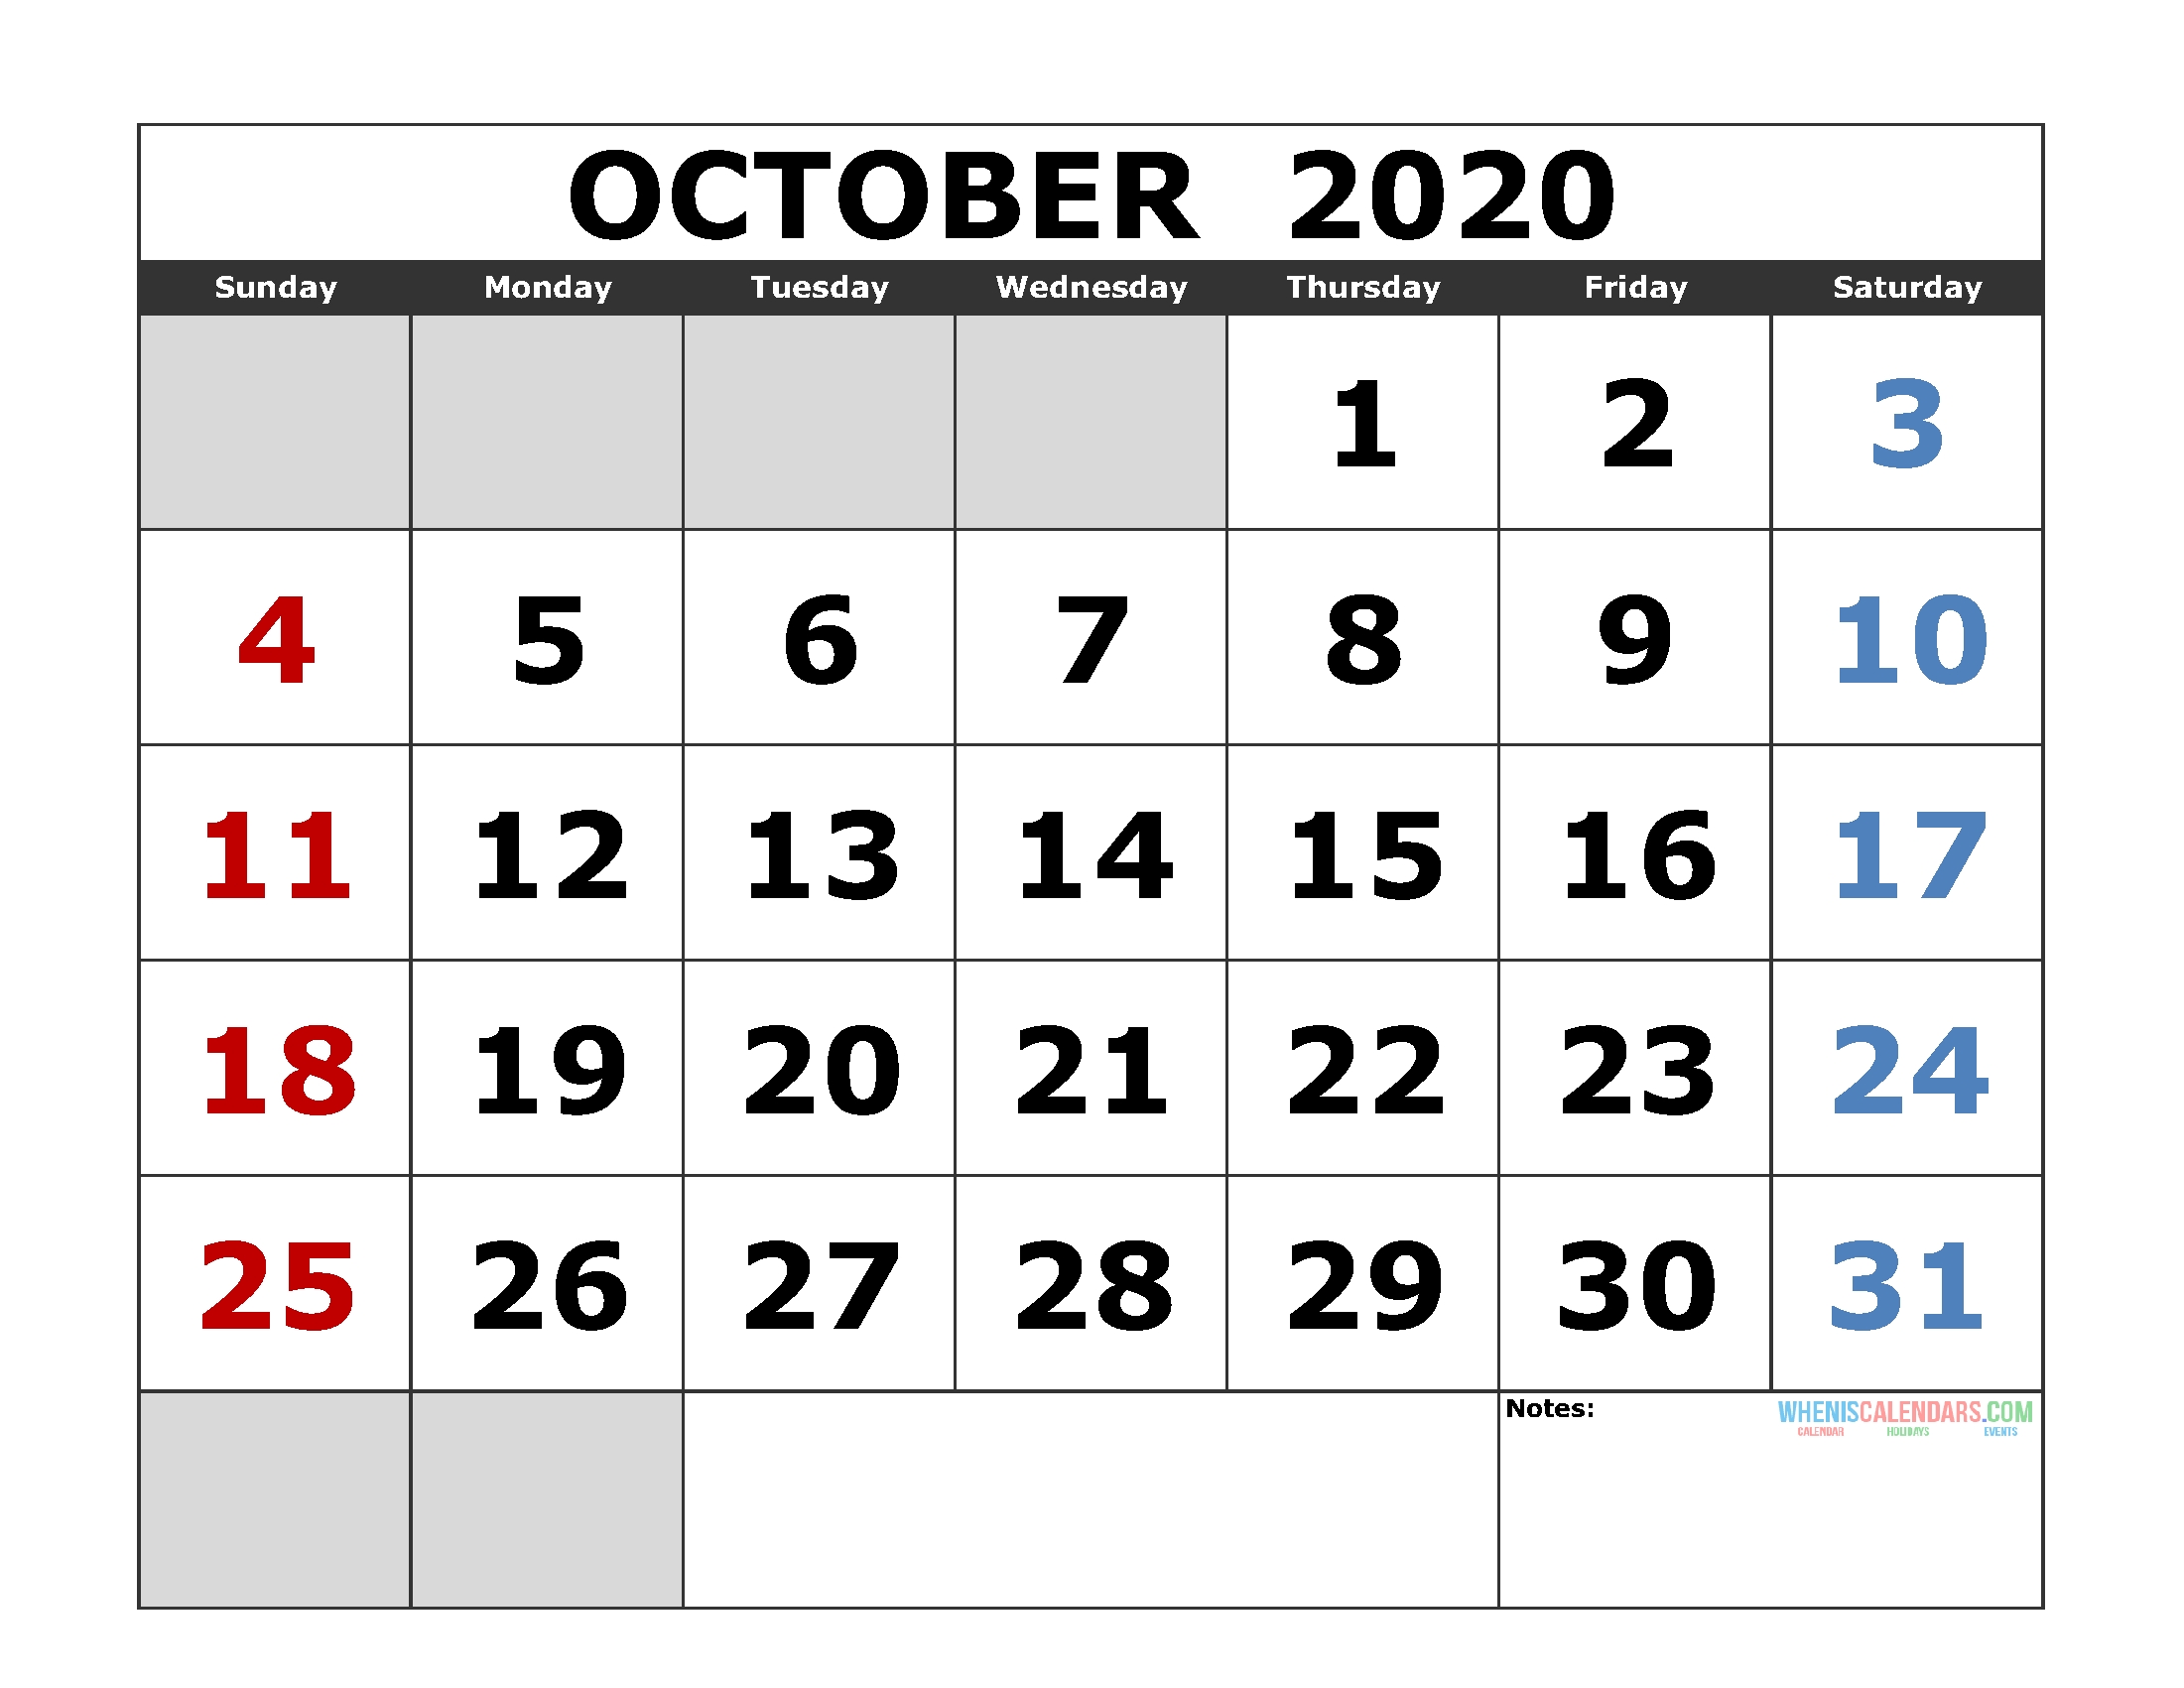 October 2020 Printable Calendar Template Excel, Pdf, Image-2020 Four Month Calendar Template Customize